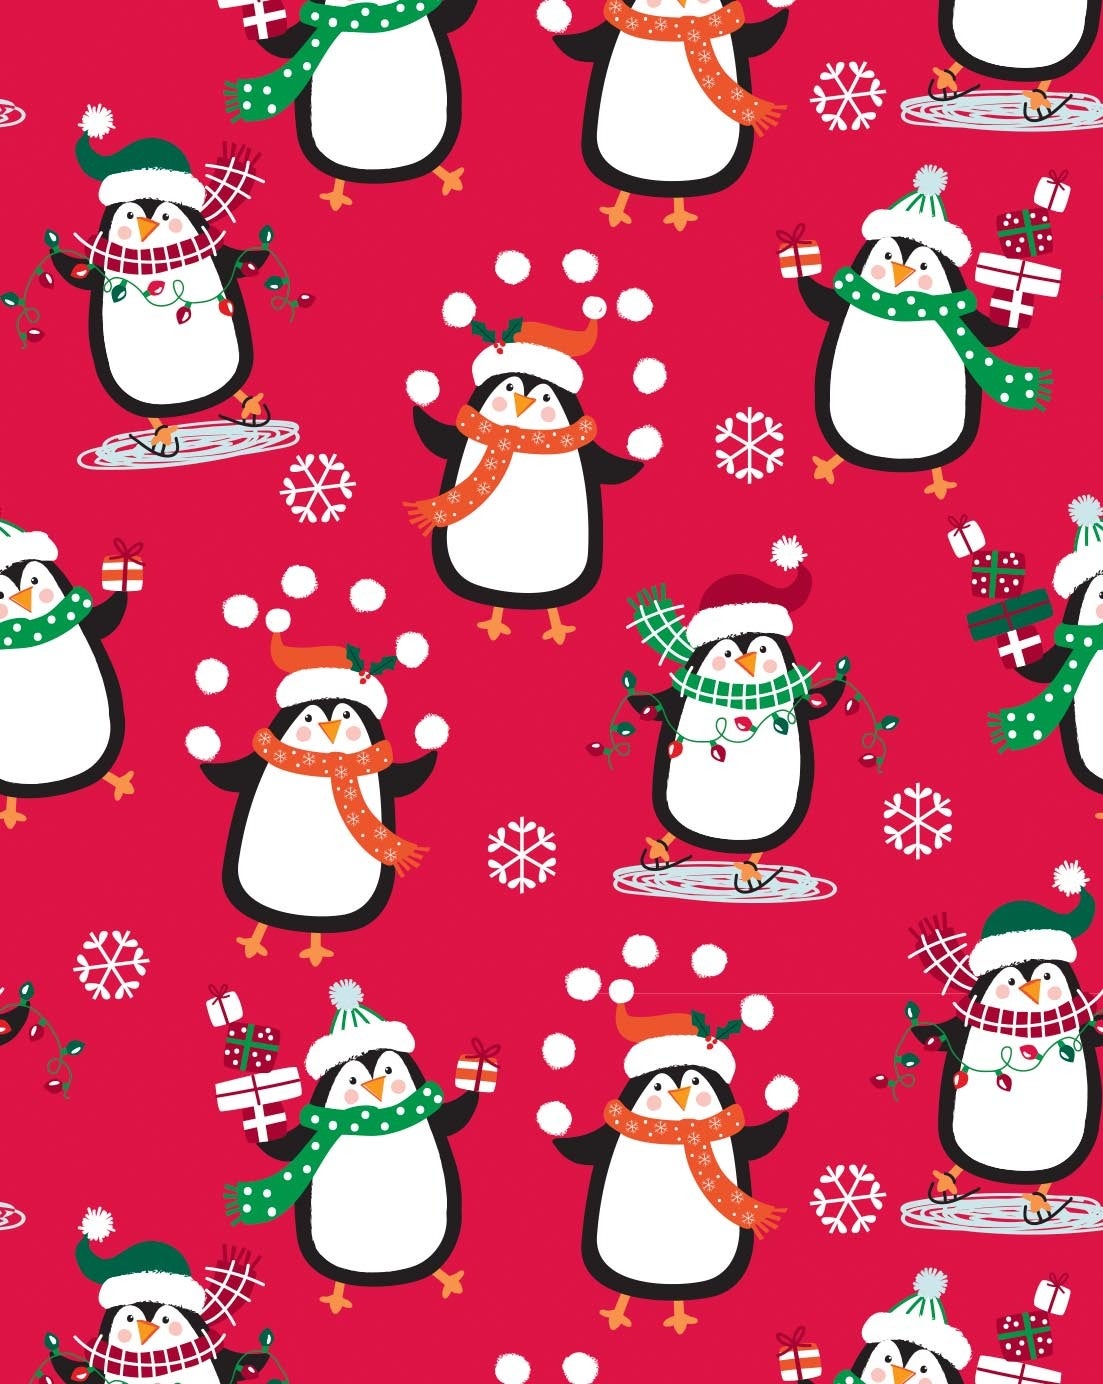 cute christmas penguins wallpaper